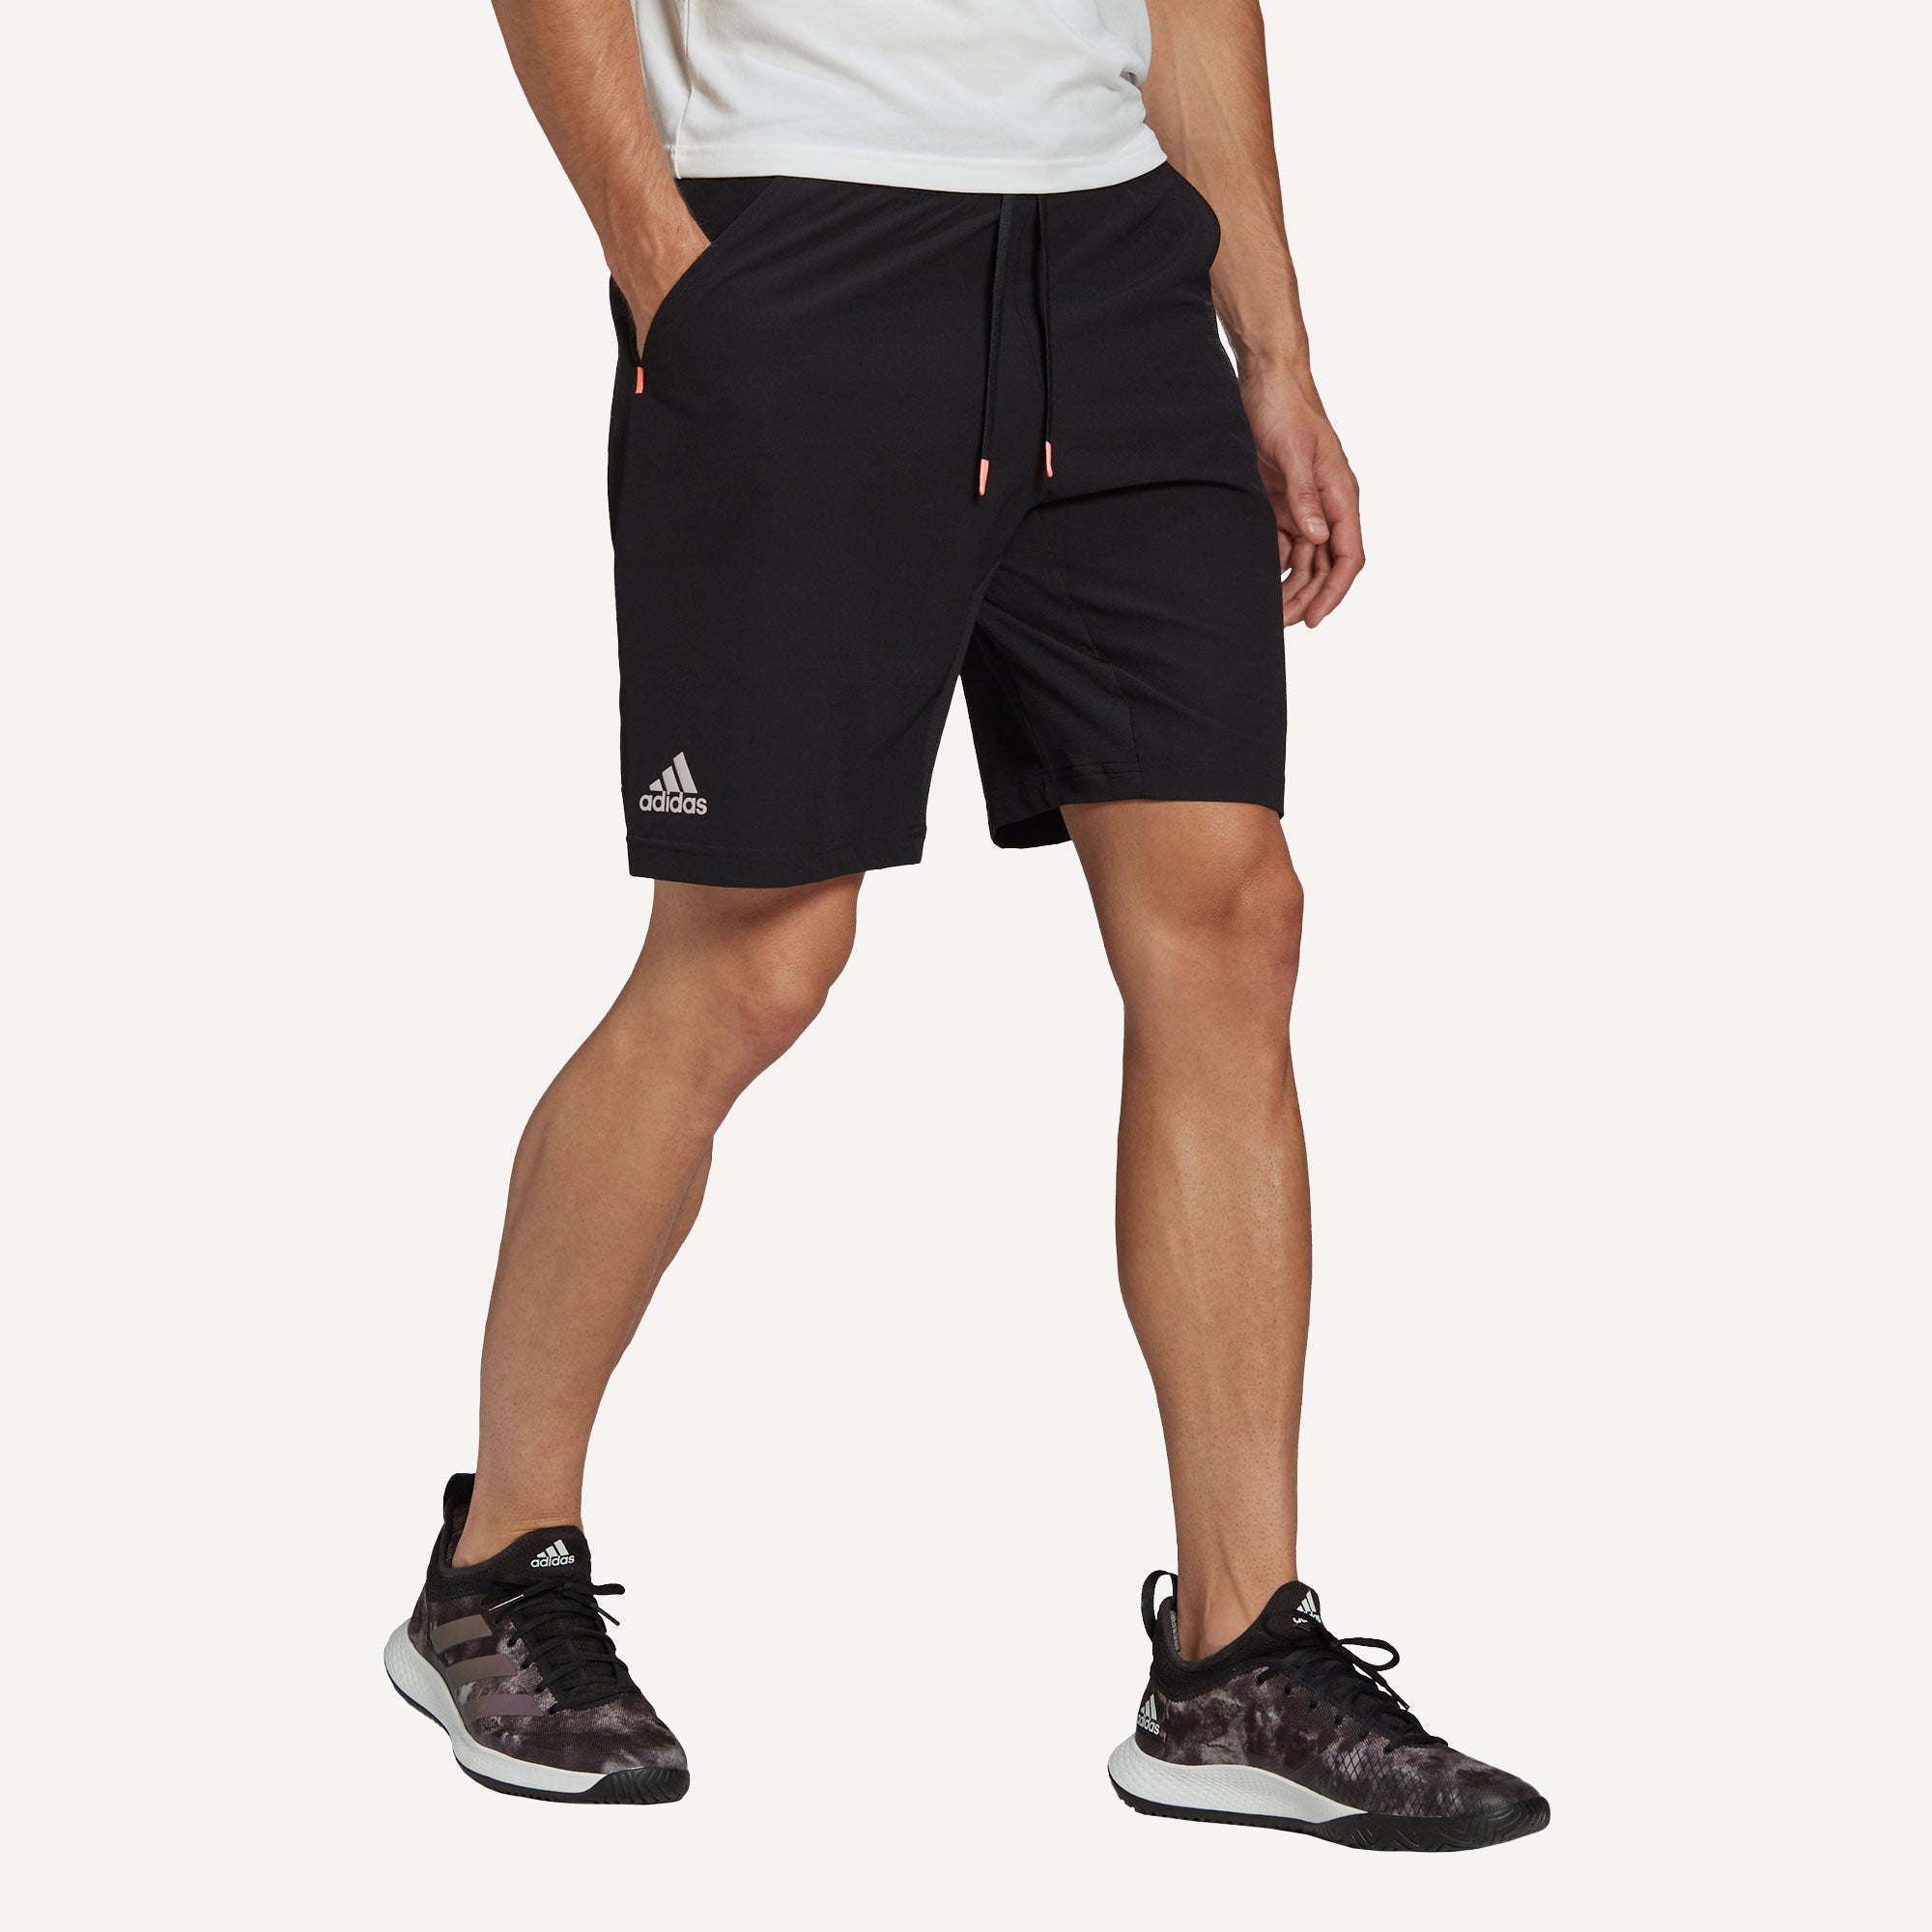 adidas Ergo Men's 9-Inch Tennis Shorts Black (3)